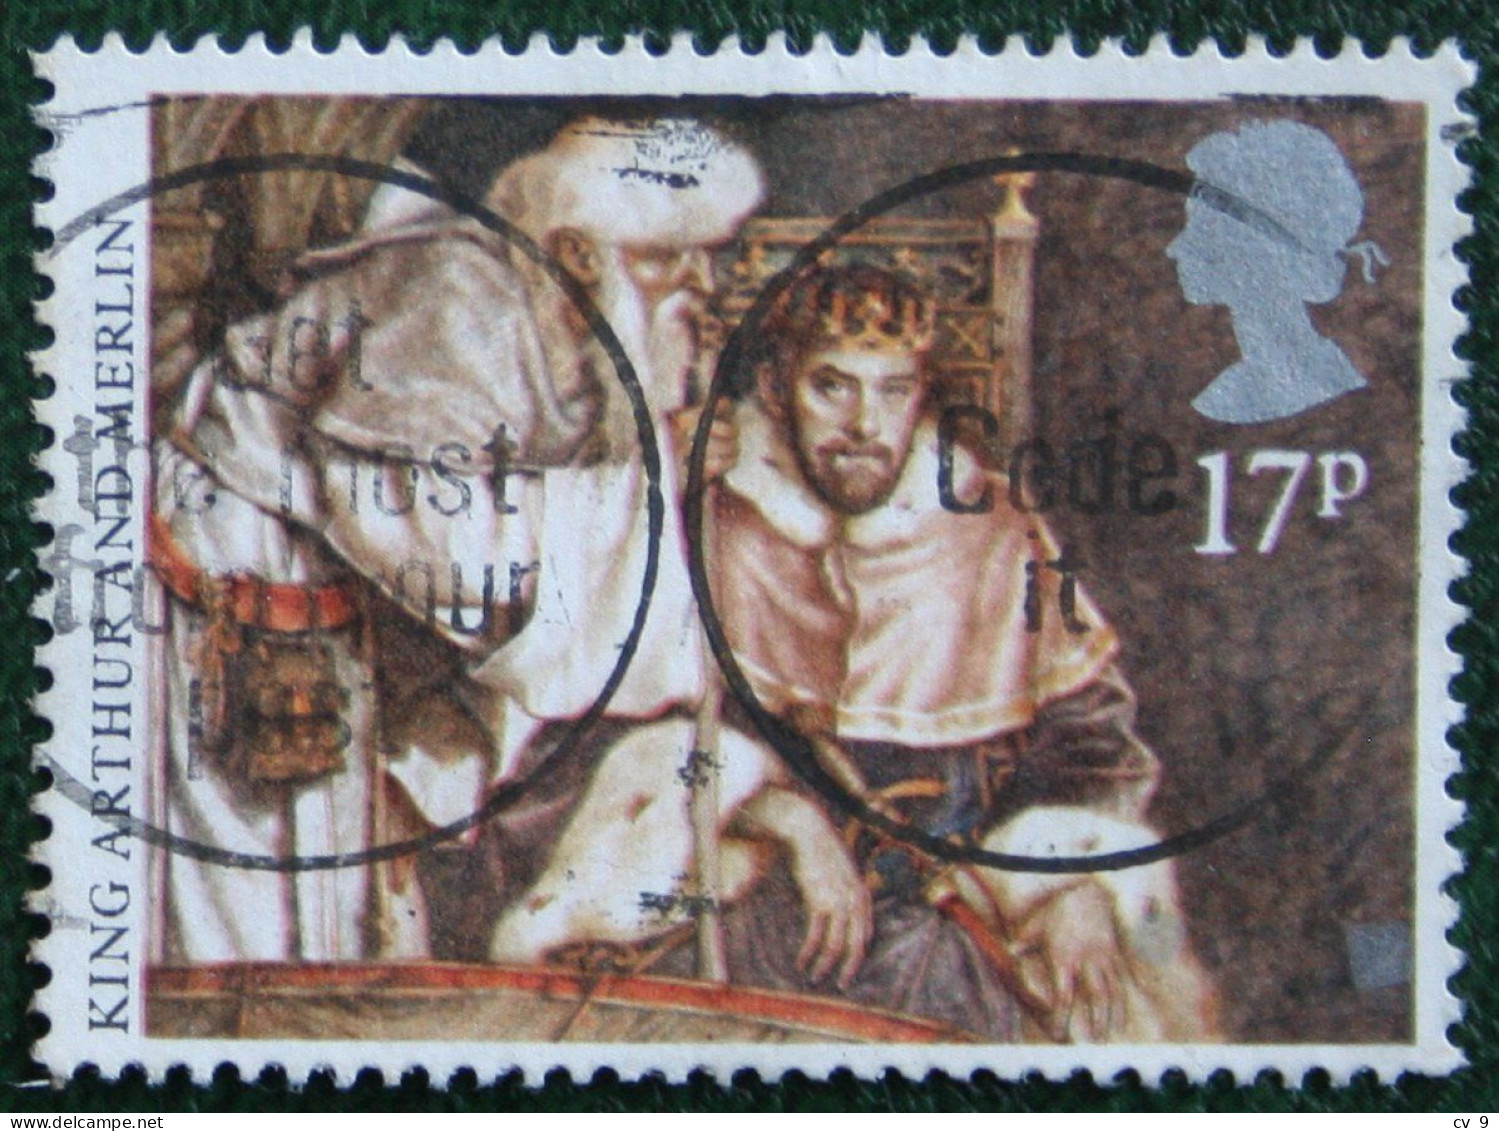 ARTHURIAN LEGENDS (Mi 1039) 1985 Used Gebruikt Oblitere ENGLAND GRANDE-BRETAGNE GB GREAT BRITAIN - Used Stamps